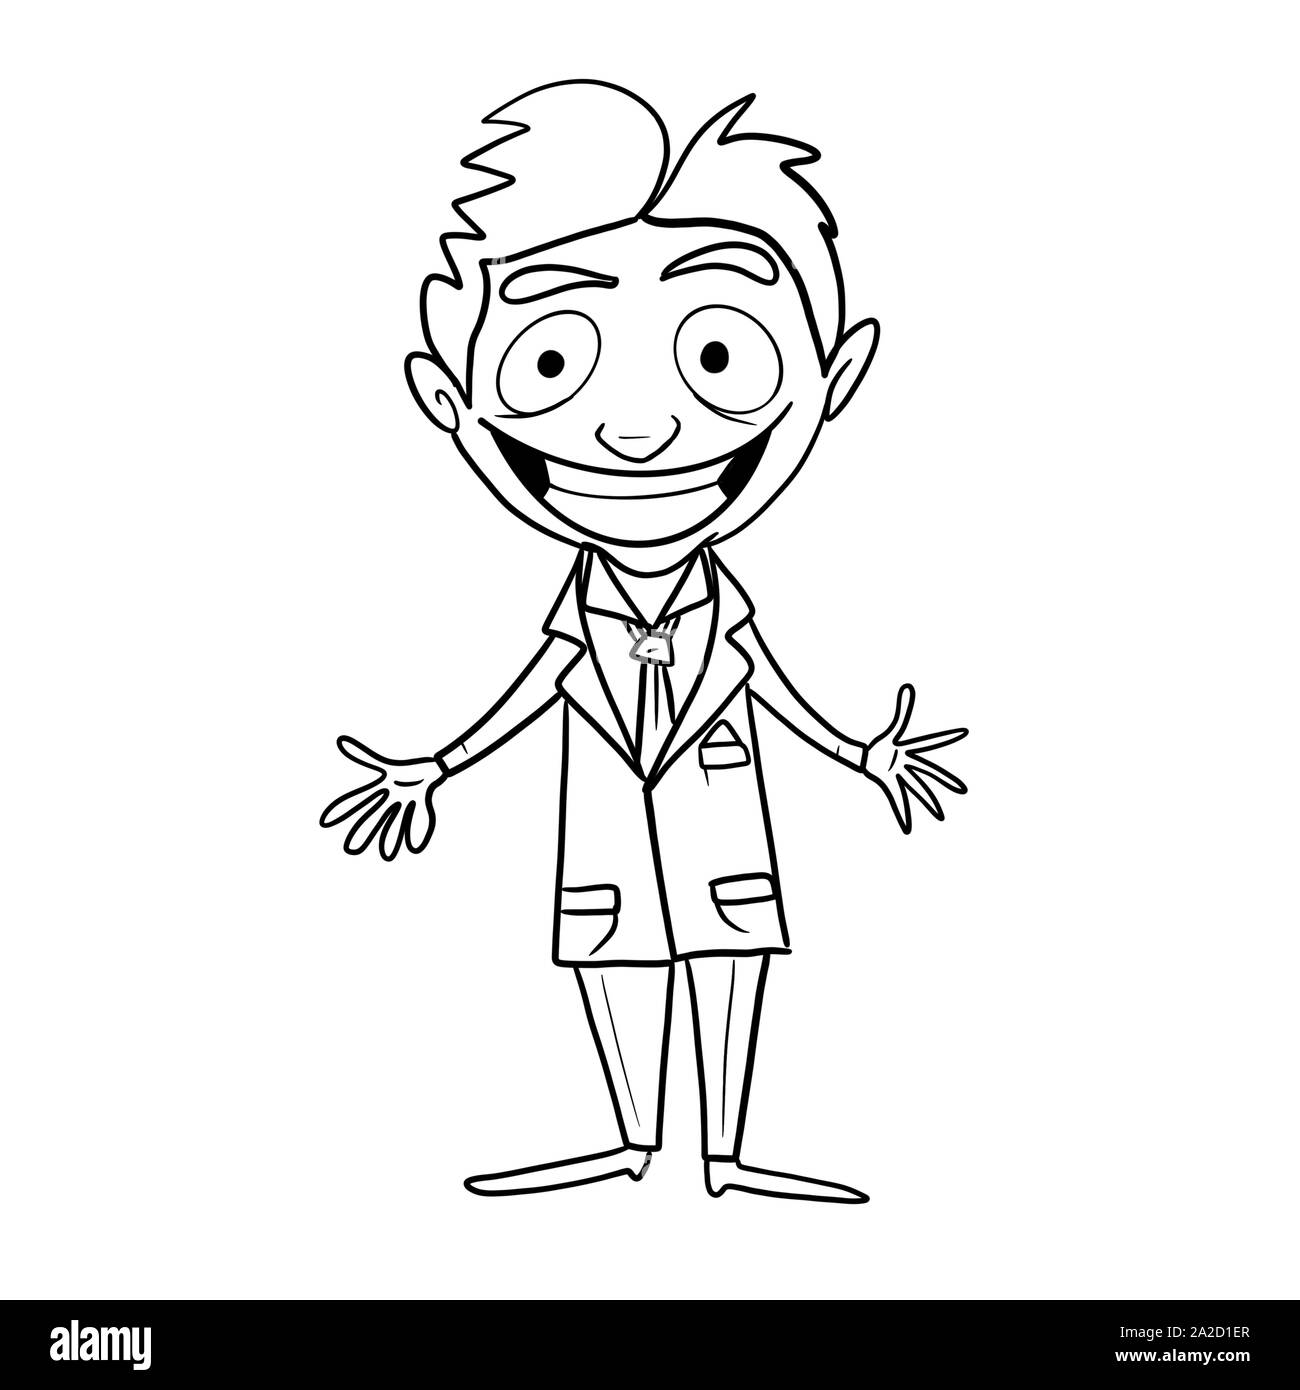 a man wearing a suit cartoon mascot Stock Photo